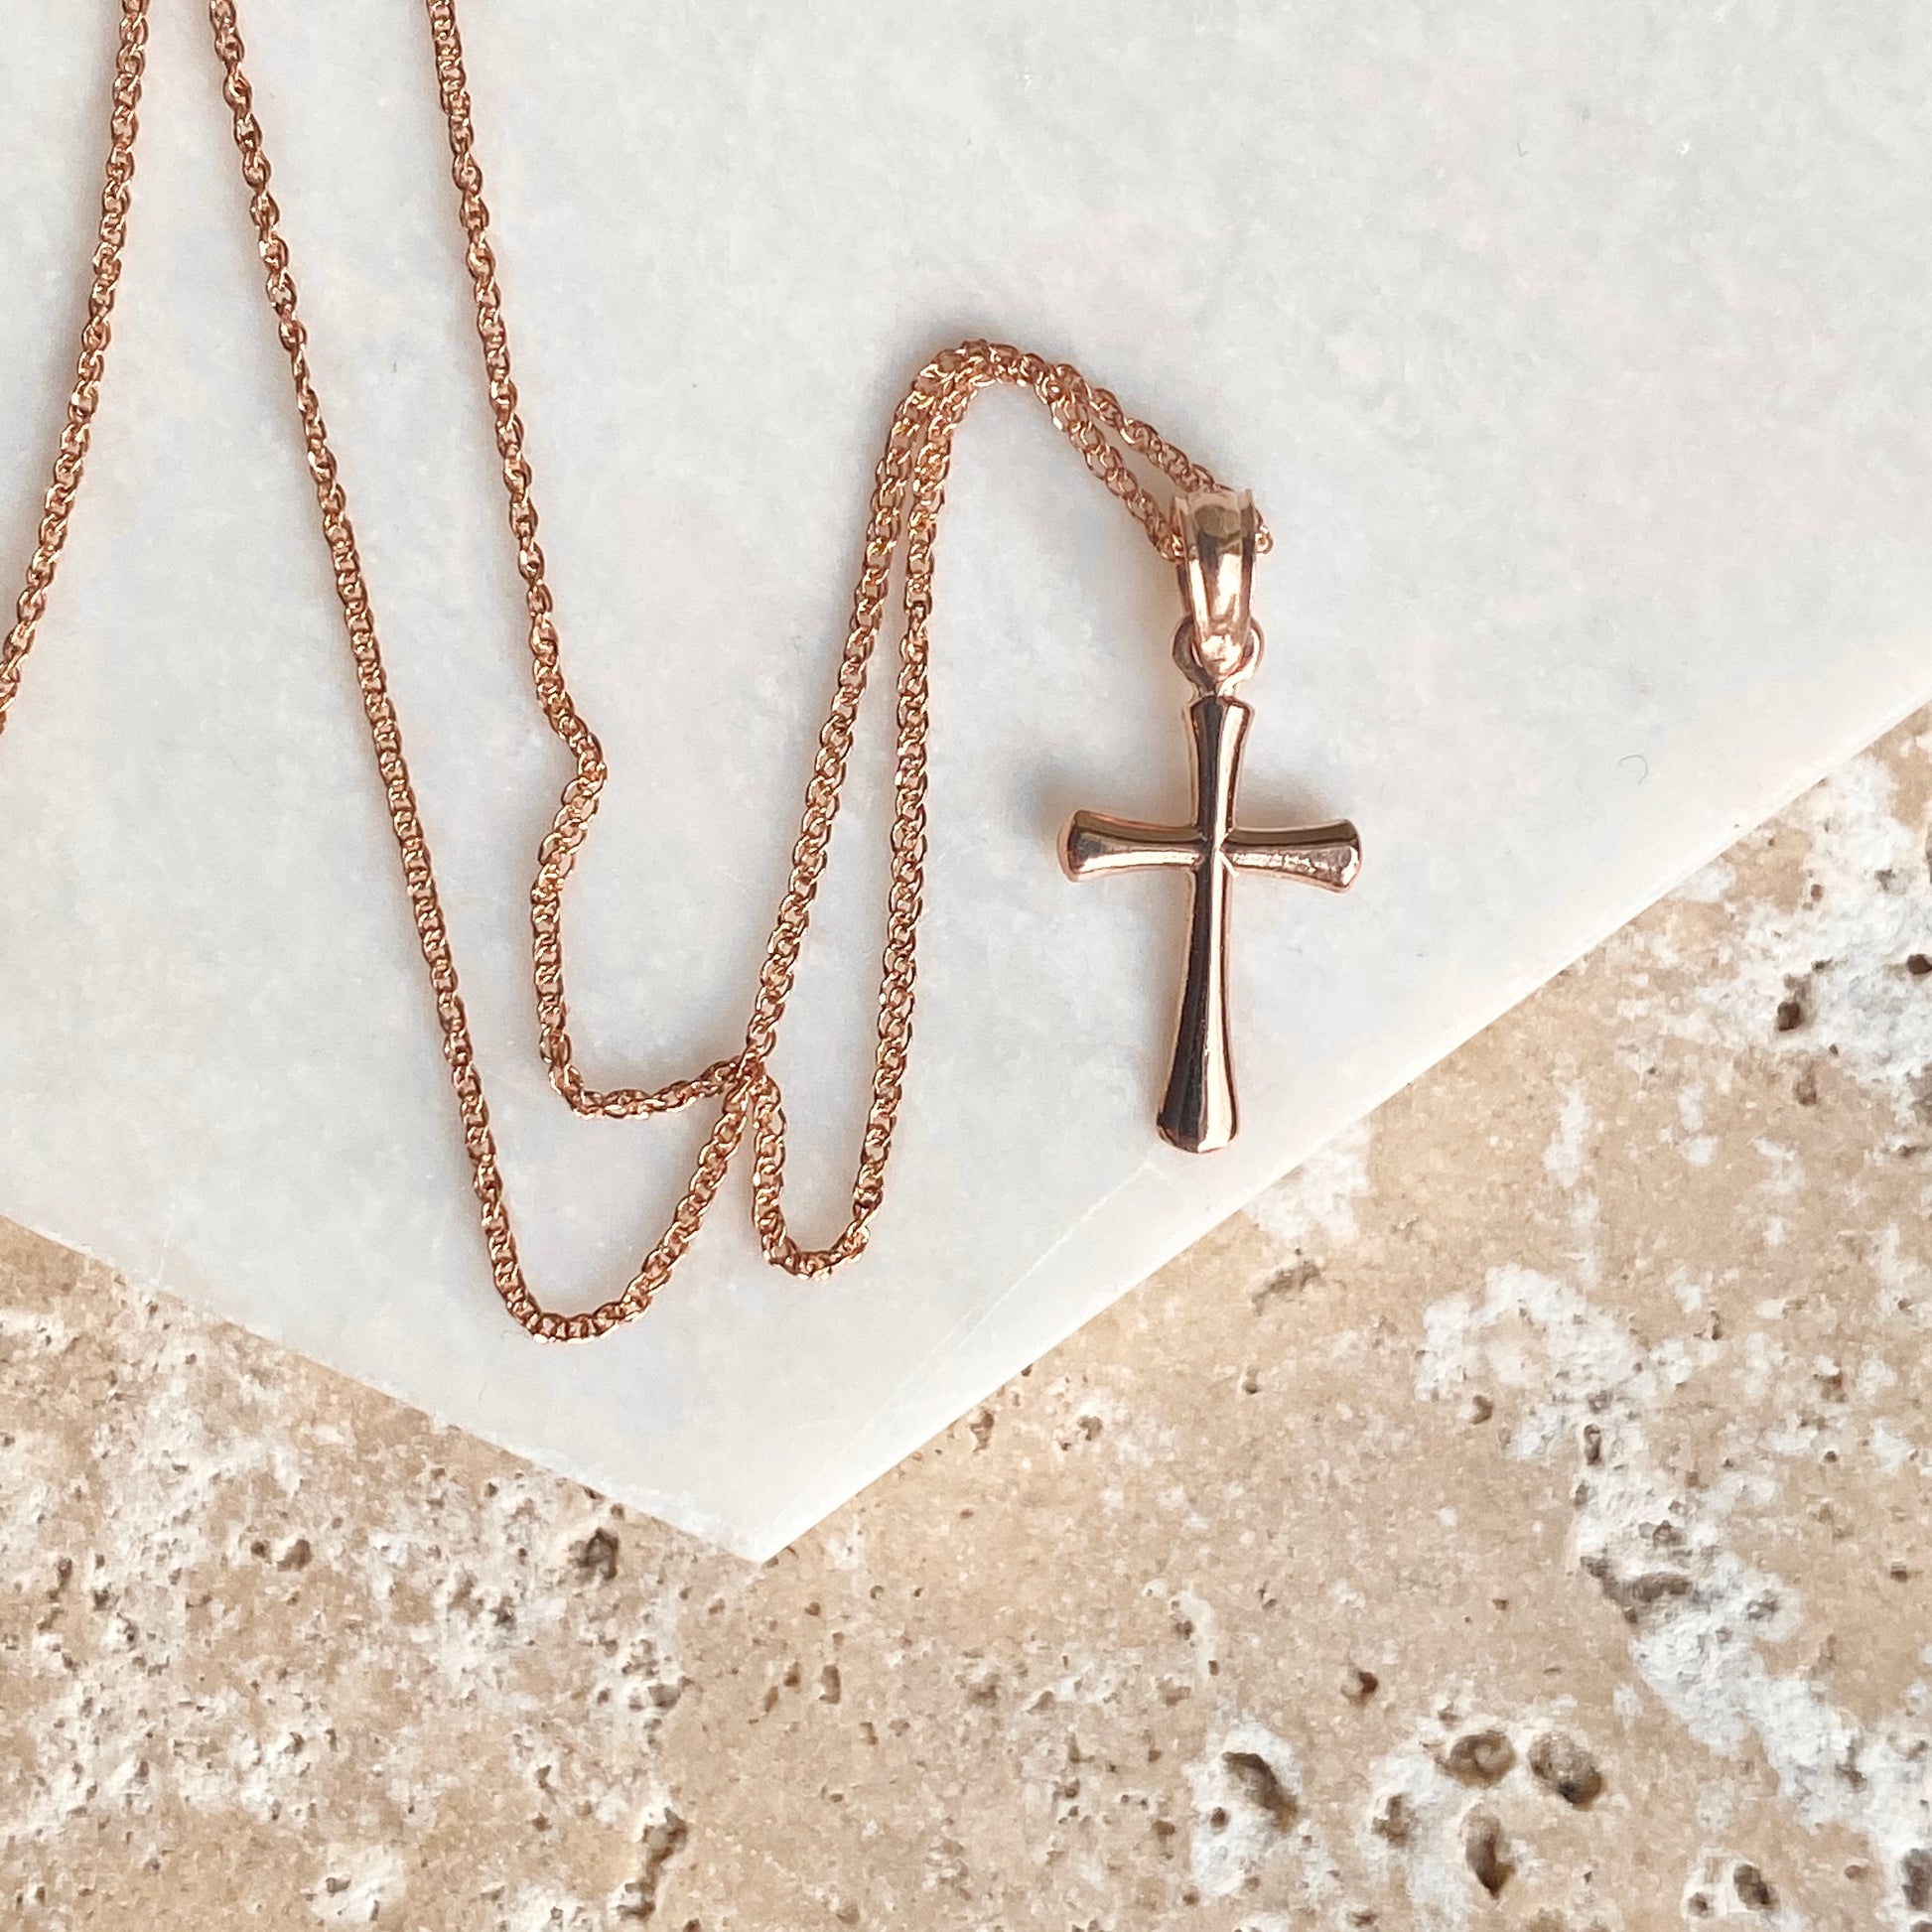 14KT Rose Gold Beveled Cross Pendant Chain Necklace, 14KT Rose Gold Beveled Cross Pendant Chain Necklace - Legacy Saint Jewelry